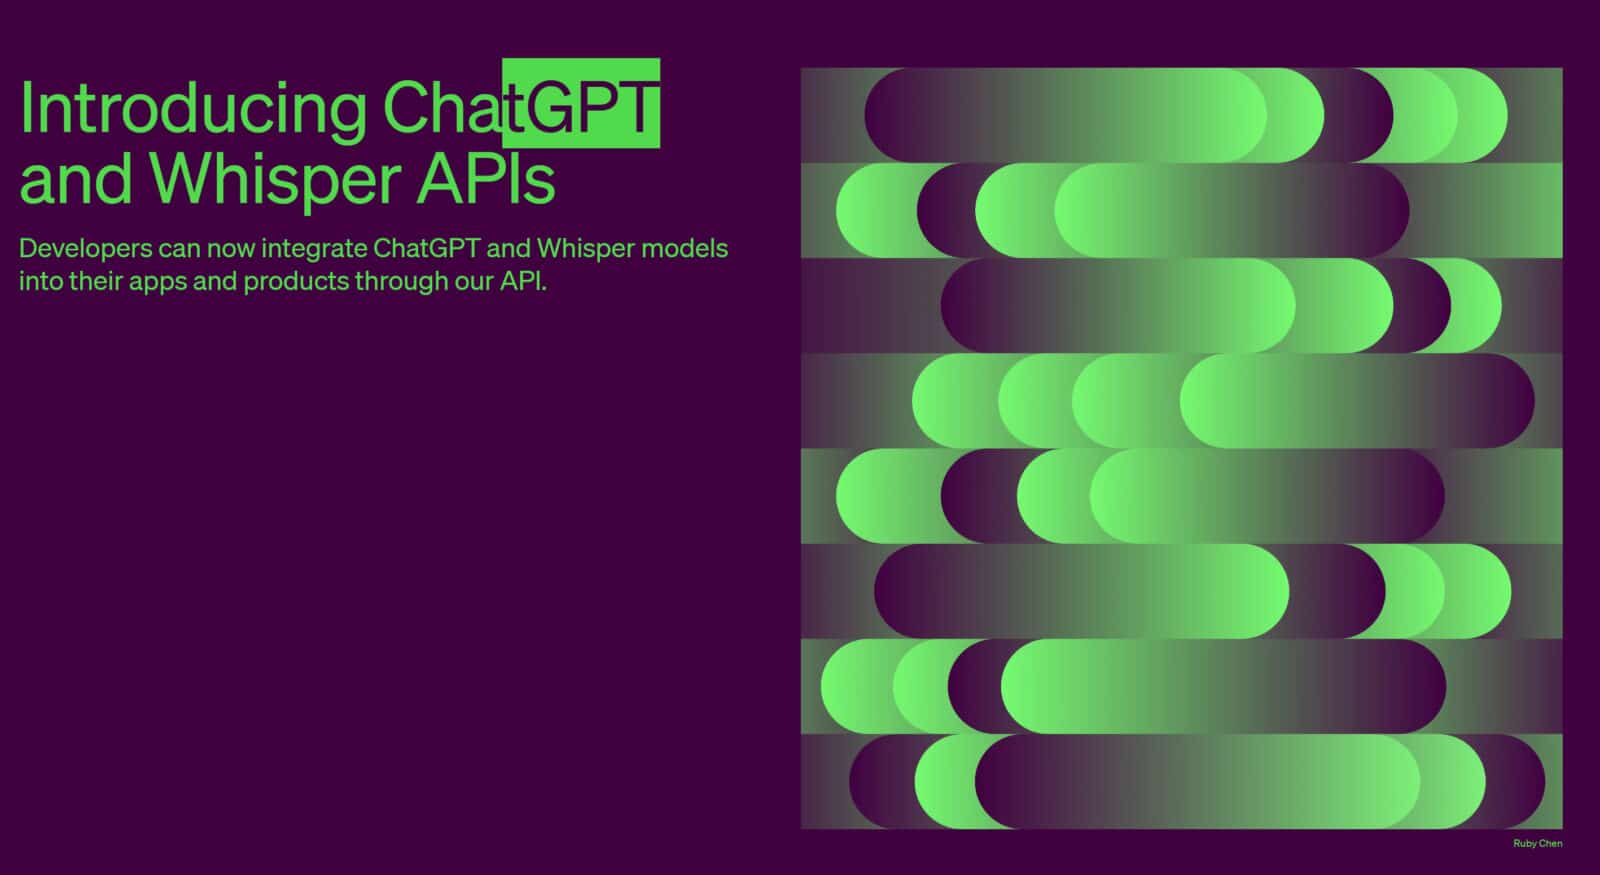 FireShot Capture 070 Introducing ChatGPT and Whisper APIs openai.com